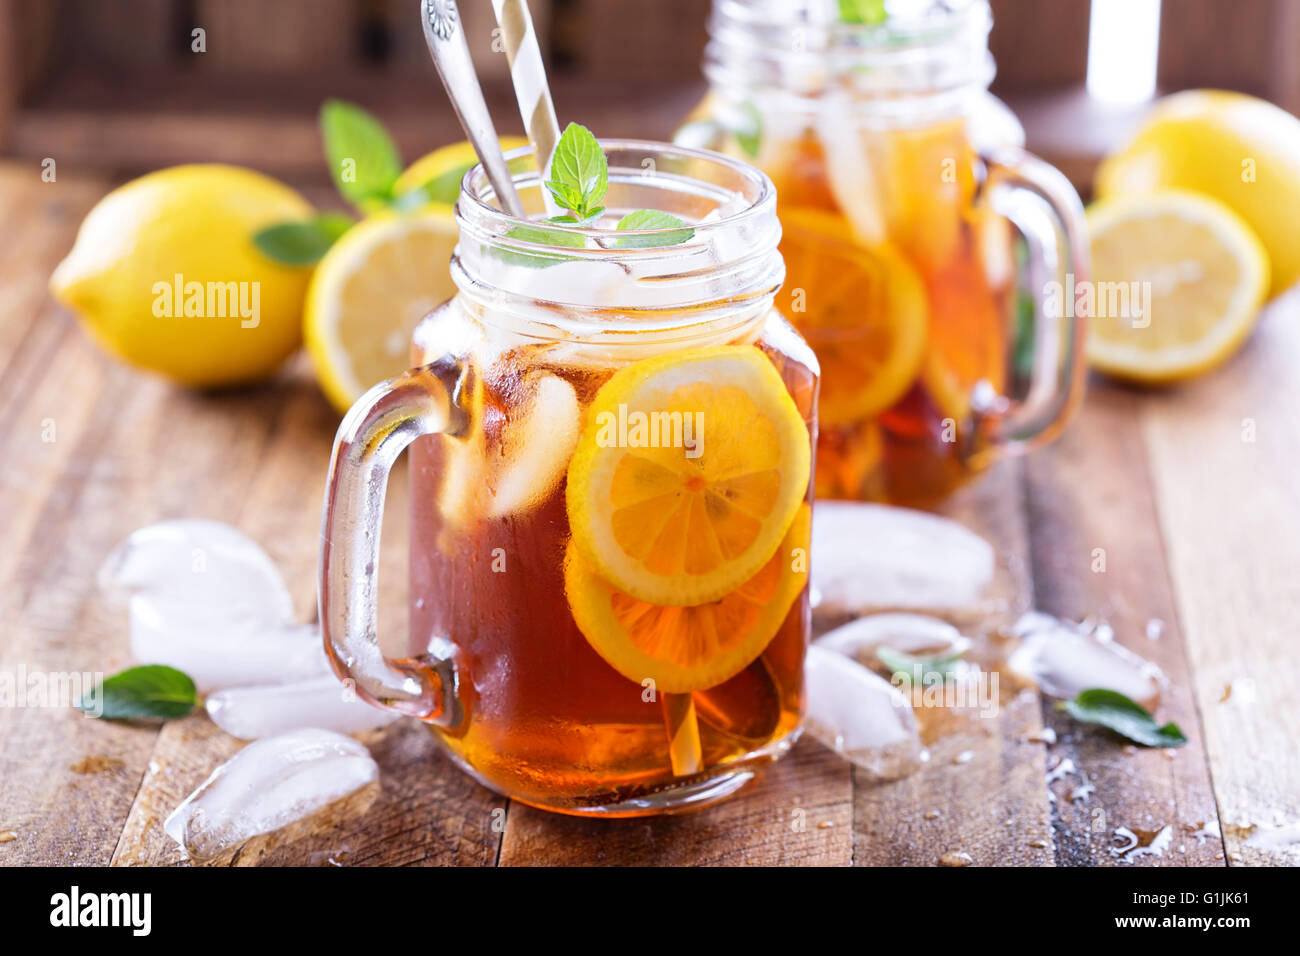 Iced tea with lemon slices Stock Photo